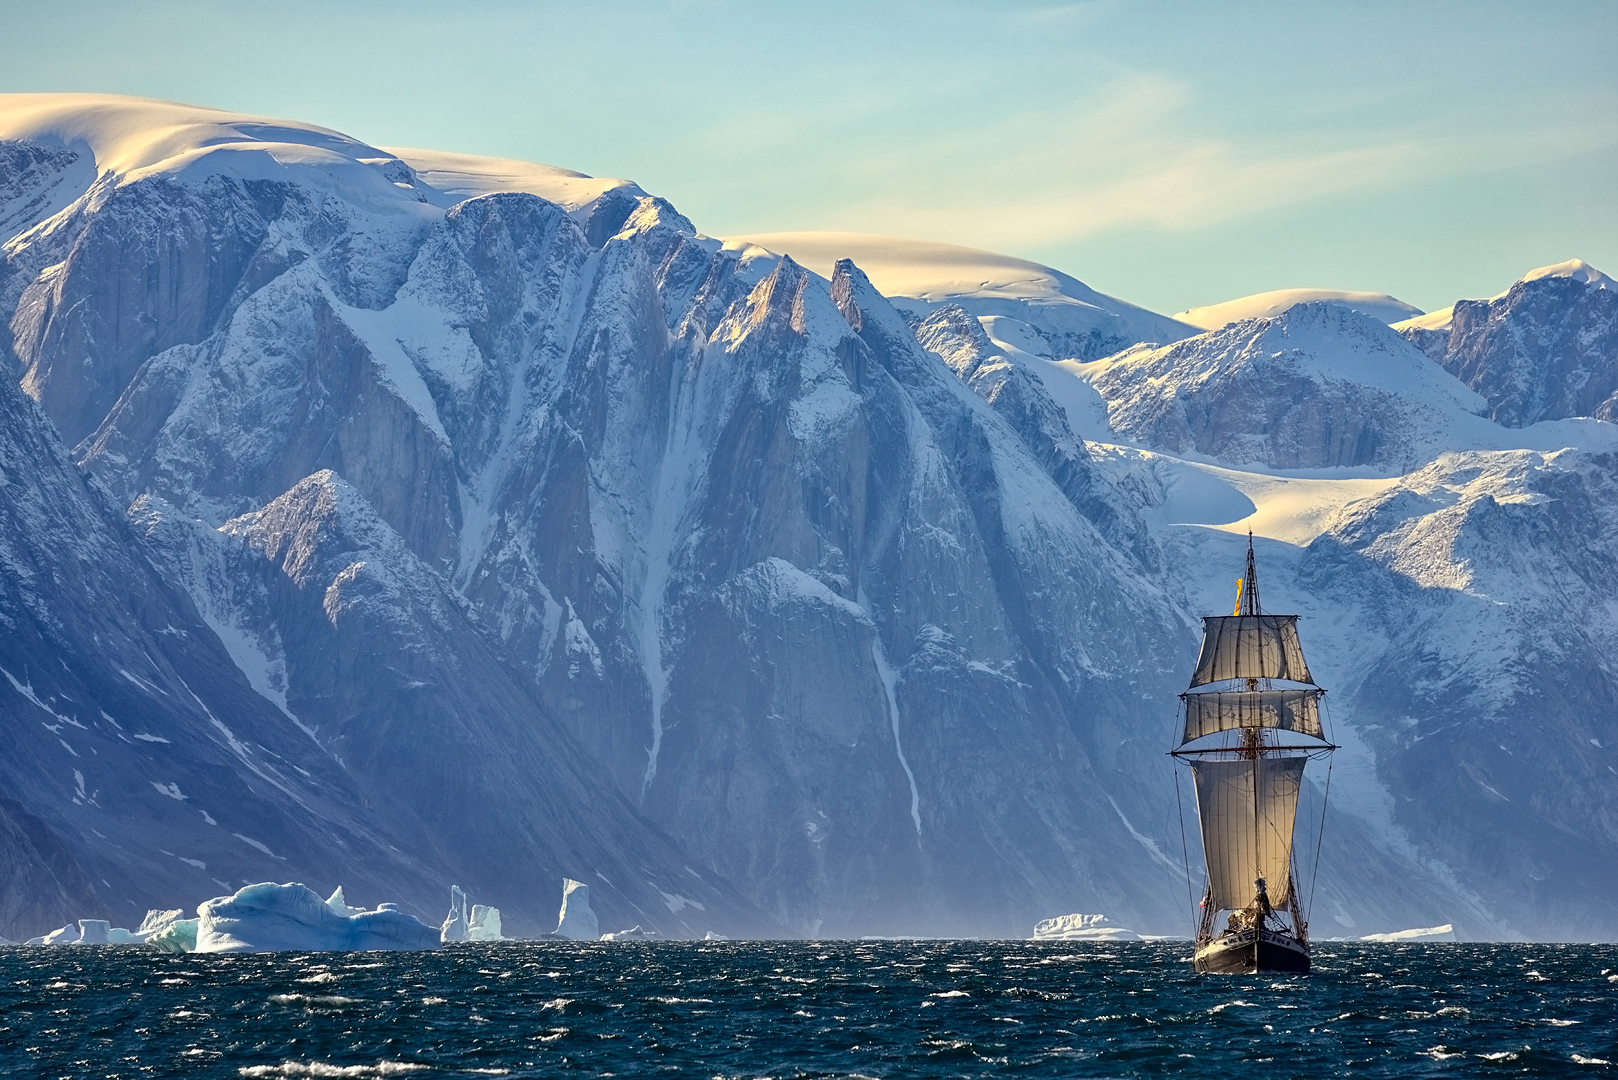 Greenland Photo Tour in Scoresby Sound | Sailing on Schooner